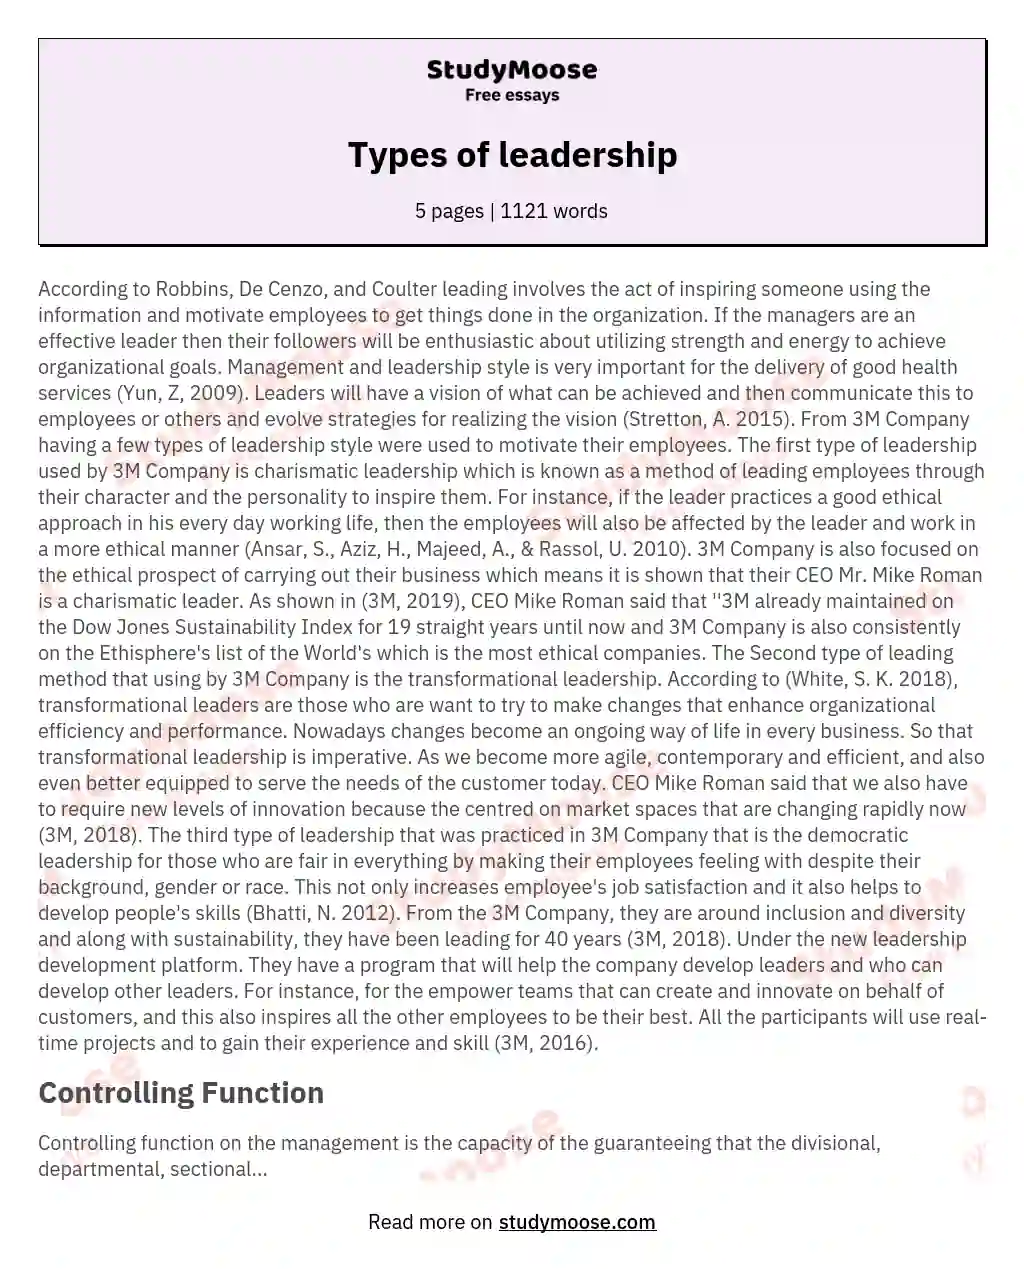 Types of leadership essay